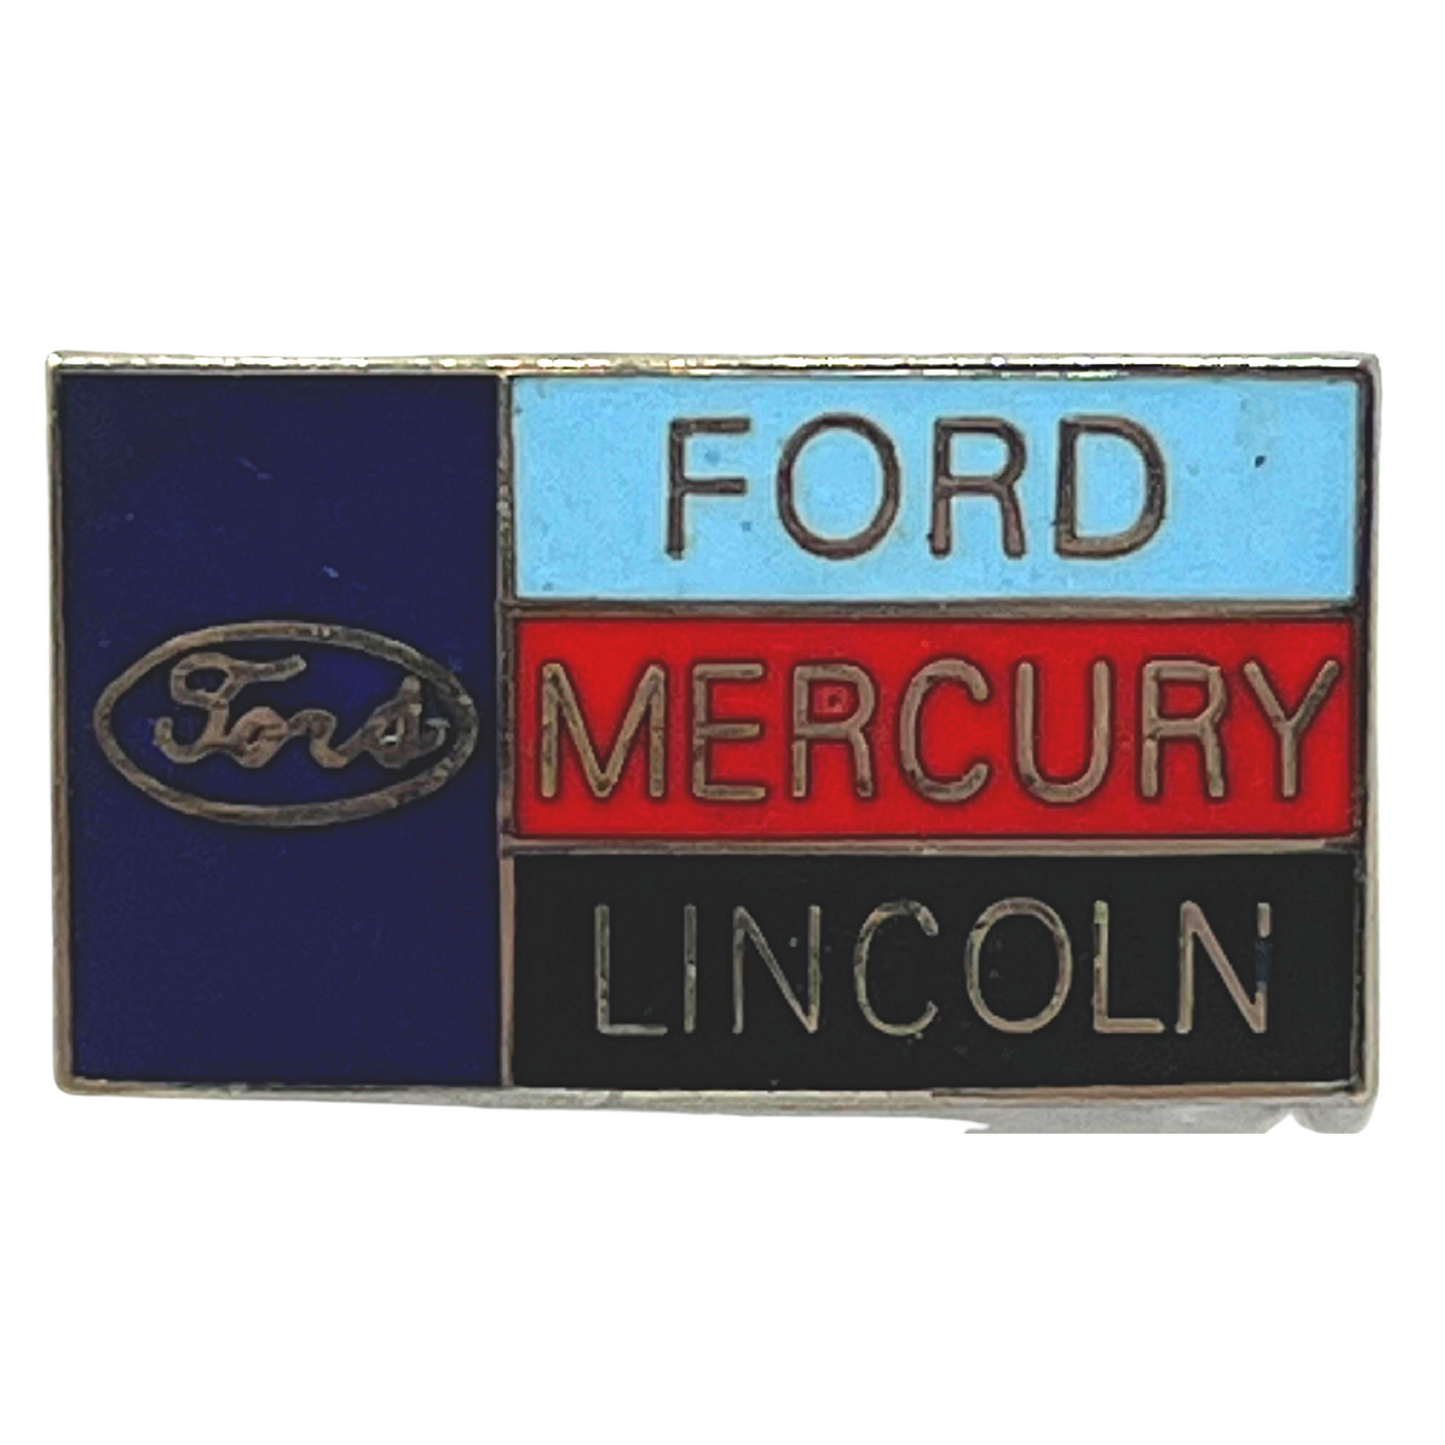 Ford Mercury Lincoln Car Dealership Automotive Lapel Pin